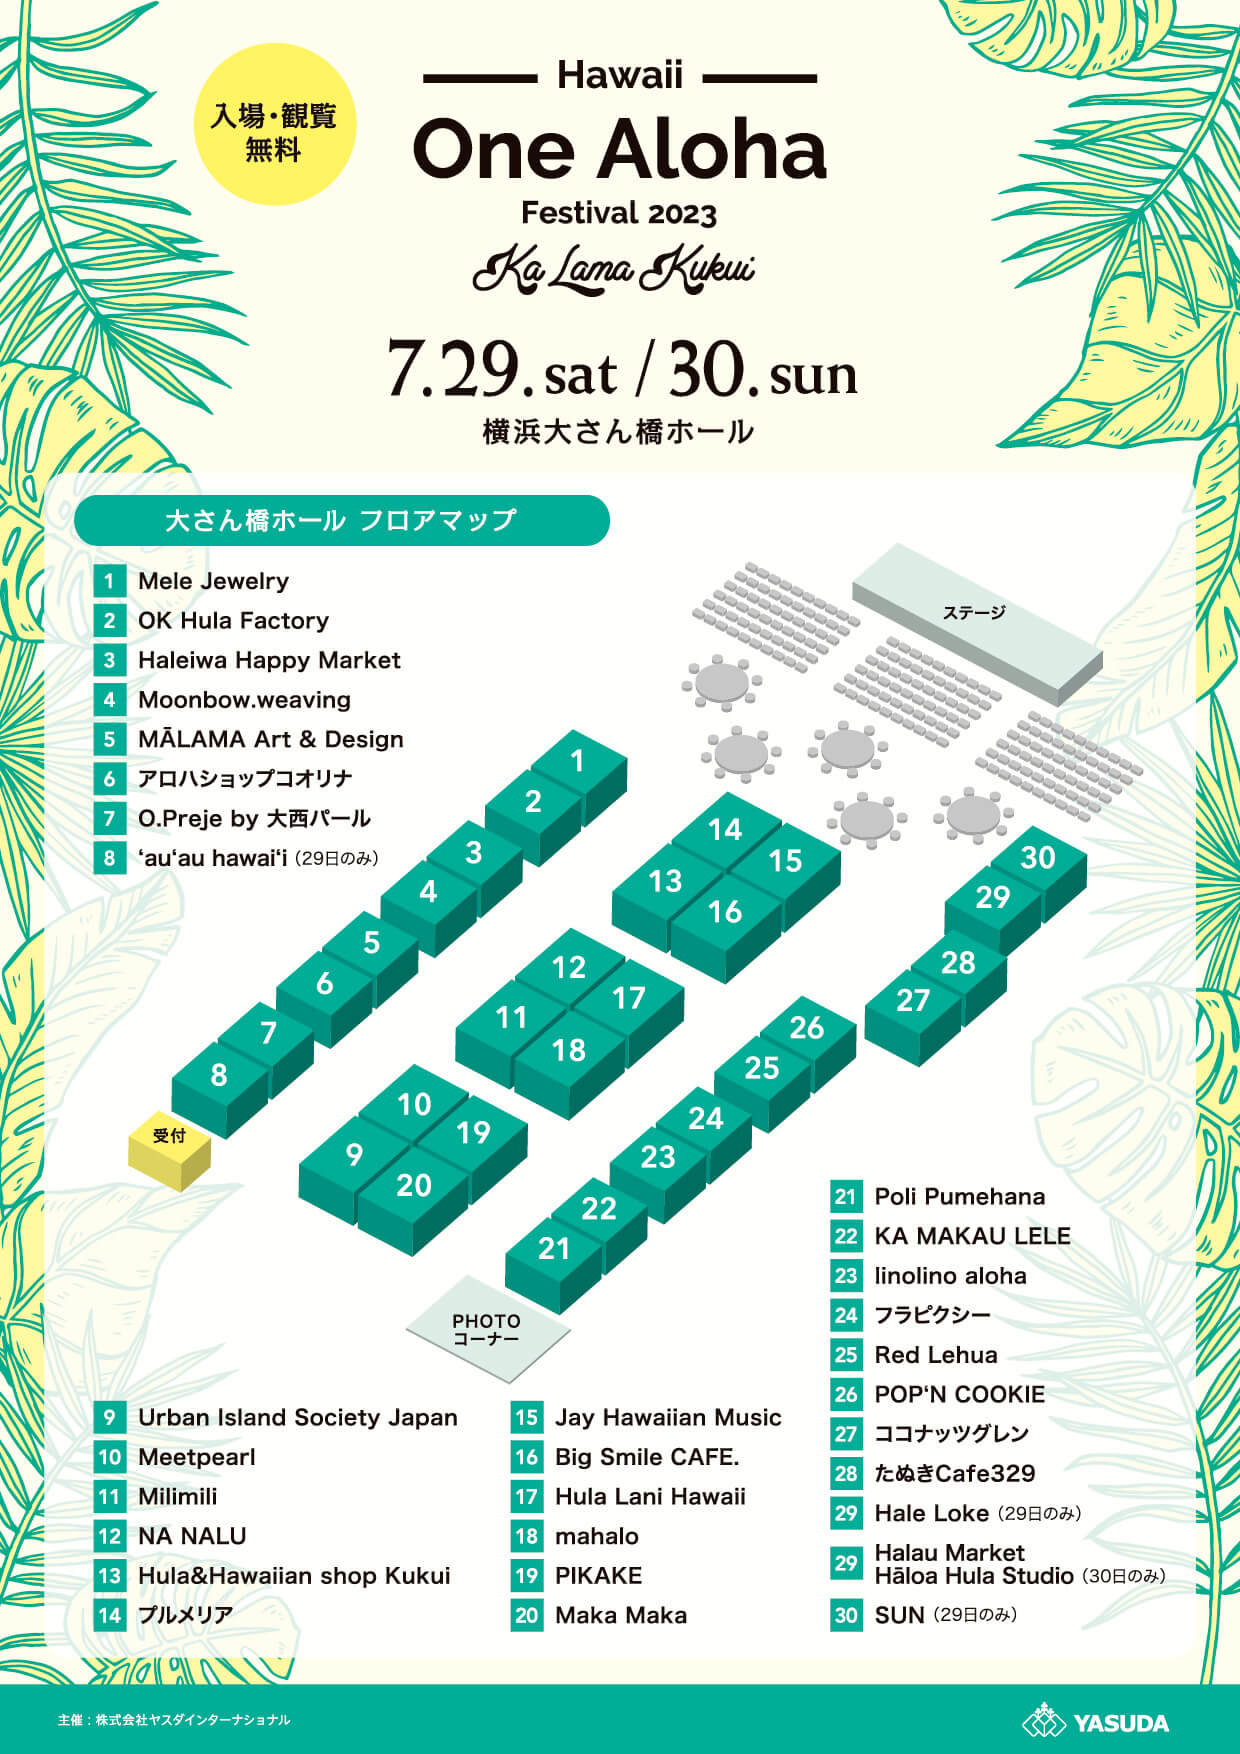 One Aloha festival 2023 KaLamaKukui エリアマップ